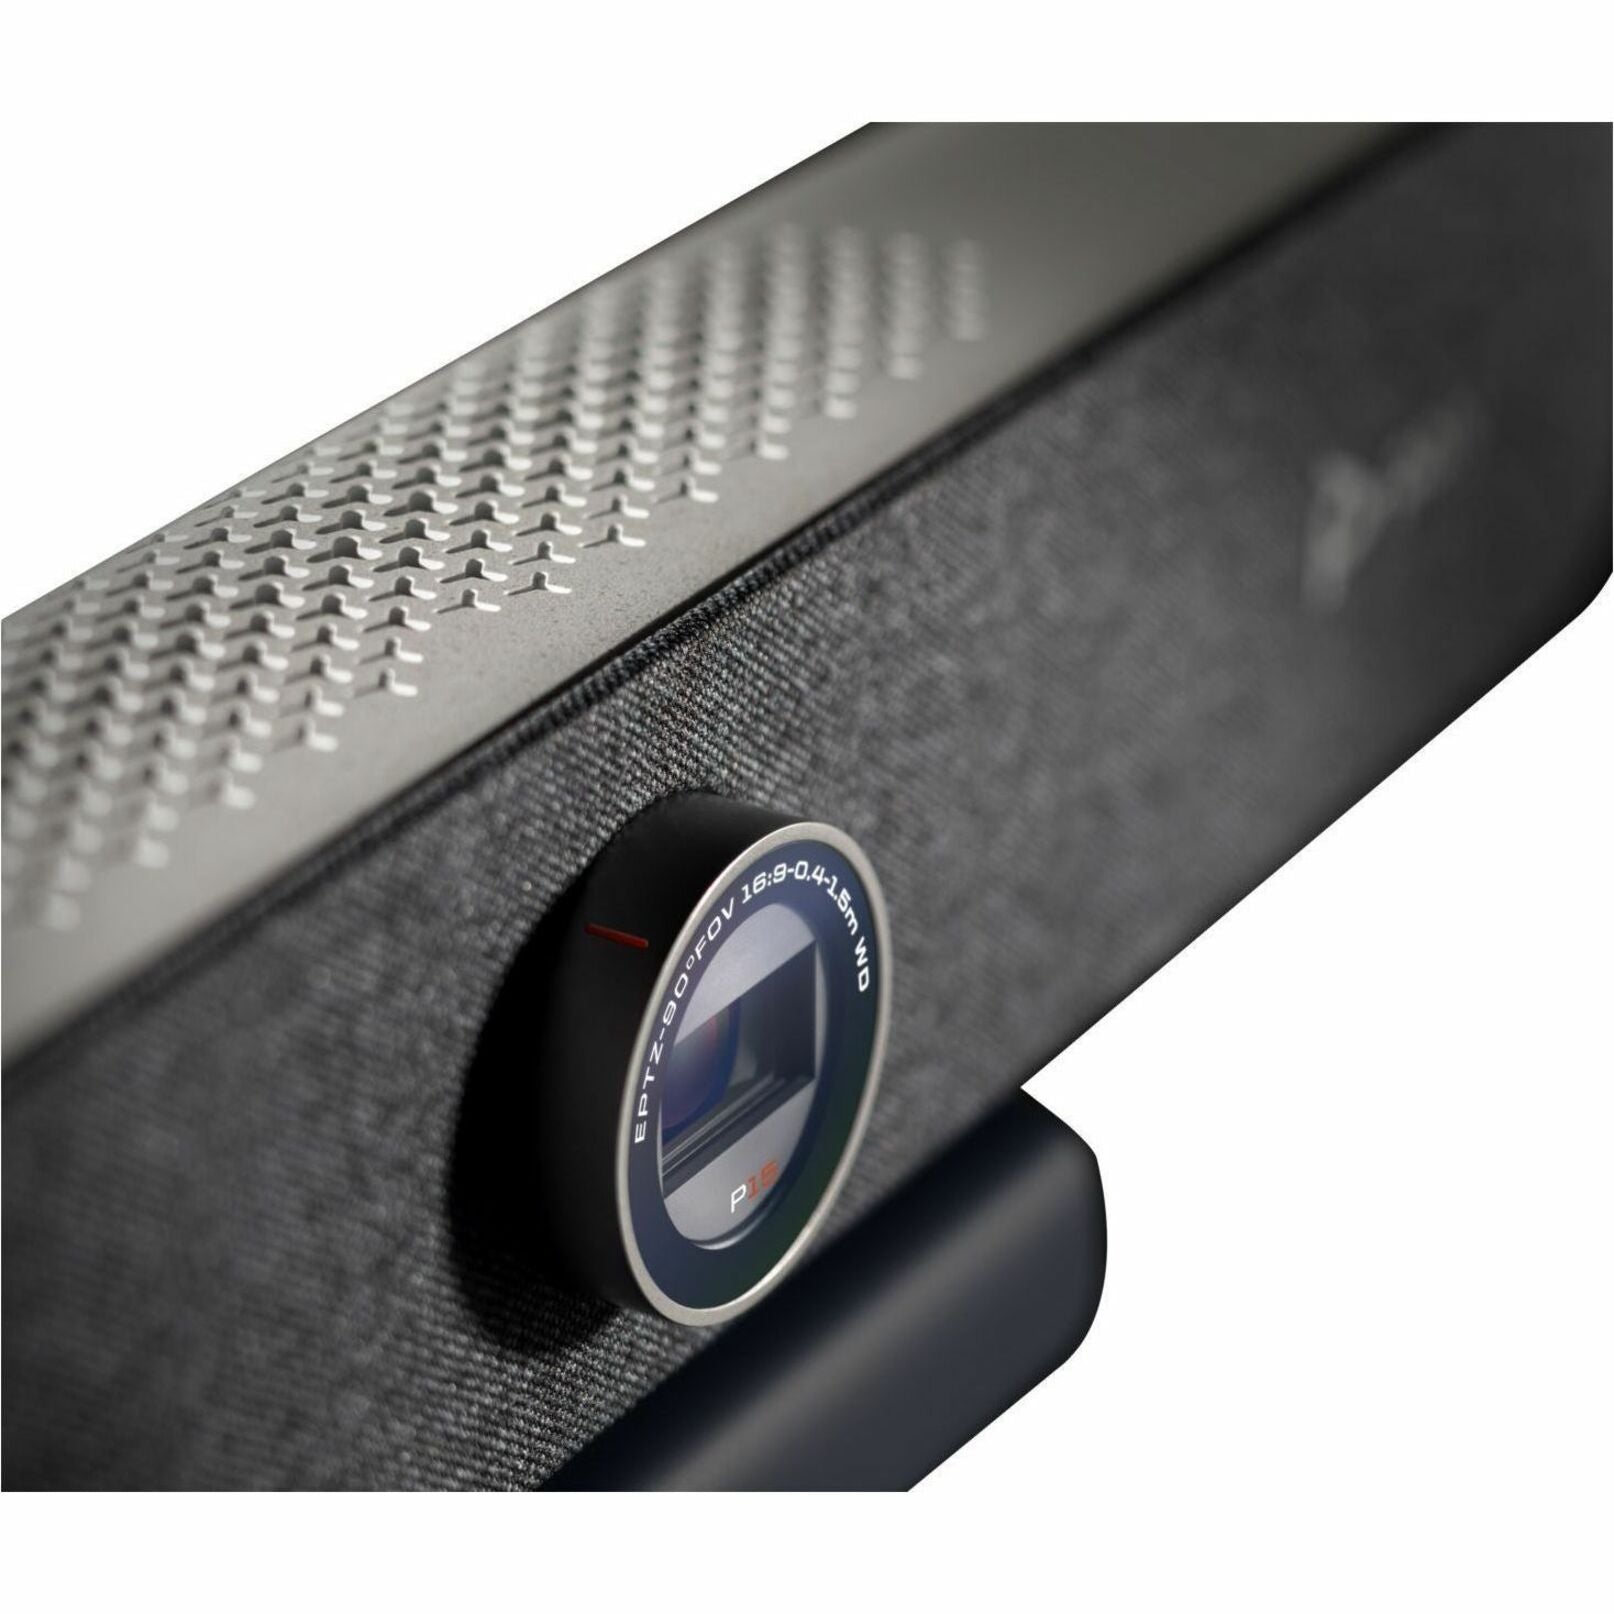 Poly Studio P15 Video Conferencing Camera, Full HD 3840 x 2160